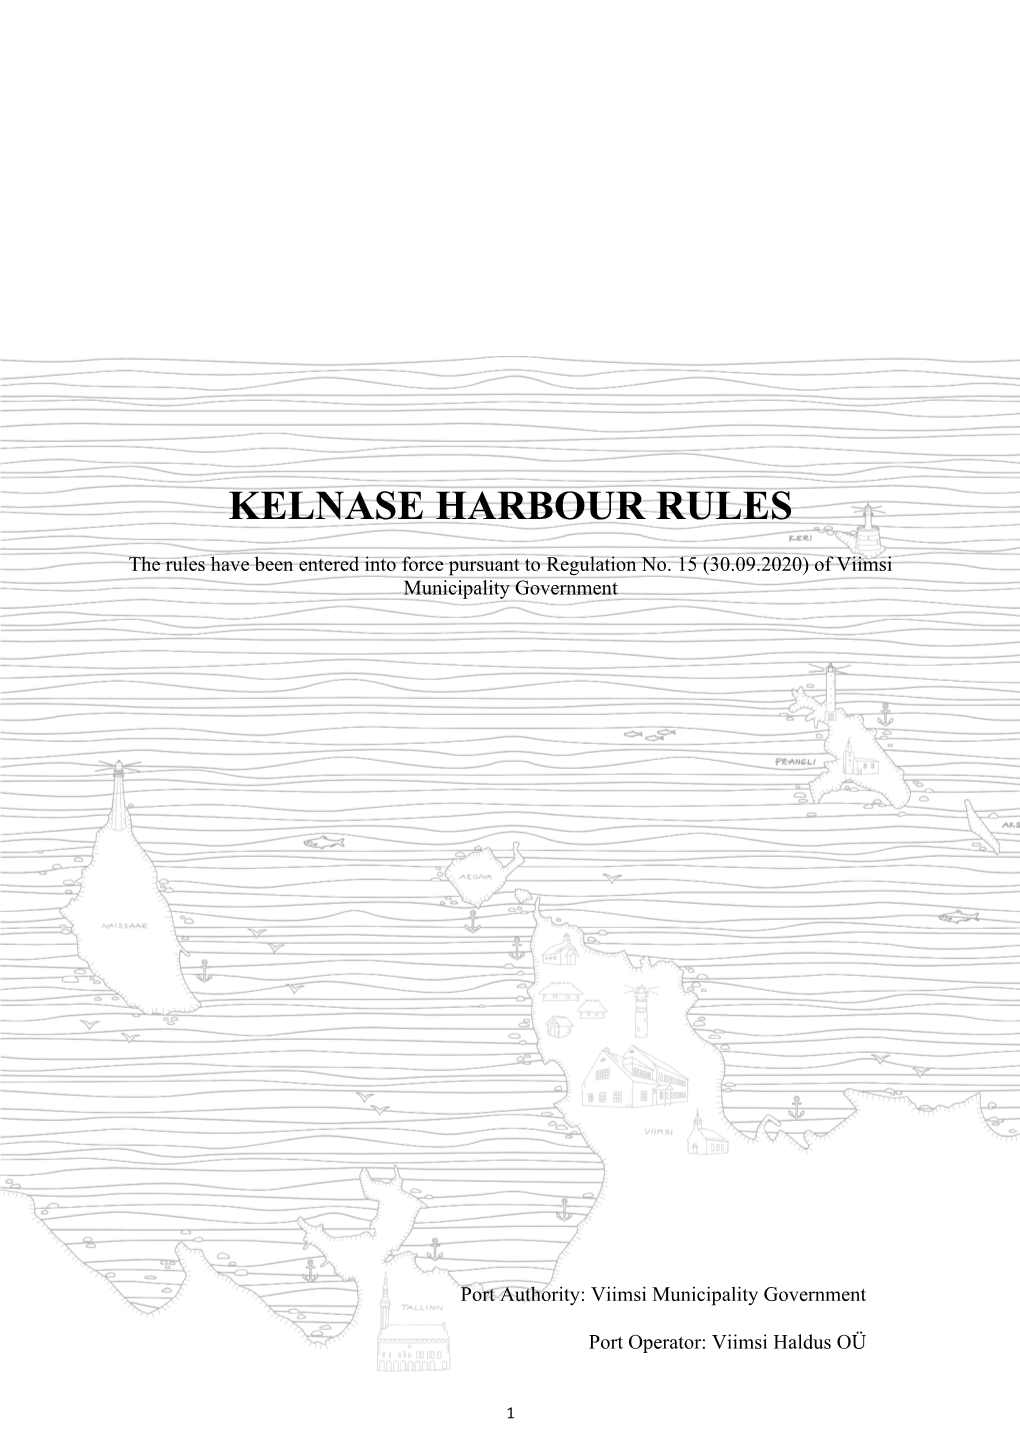 Kelnase Harbour Rules